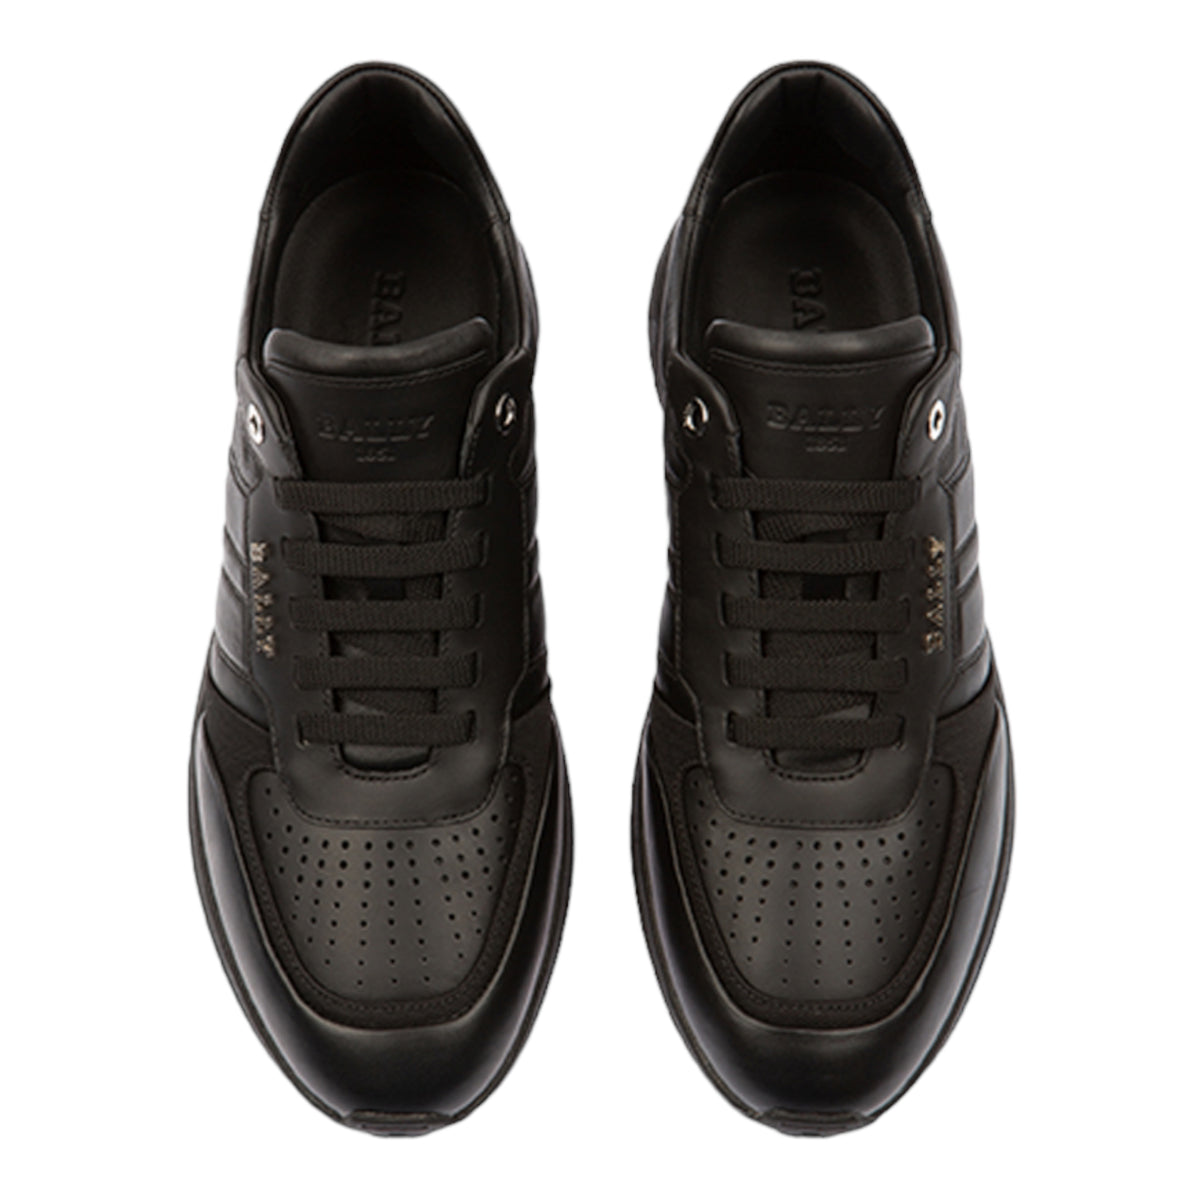 Bally Men's Dessye Leather Sneakers